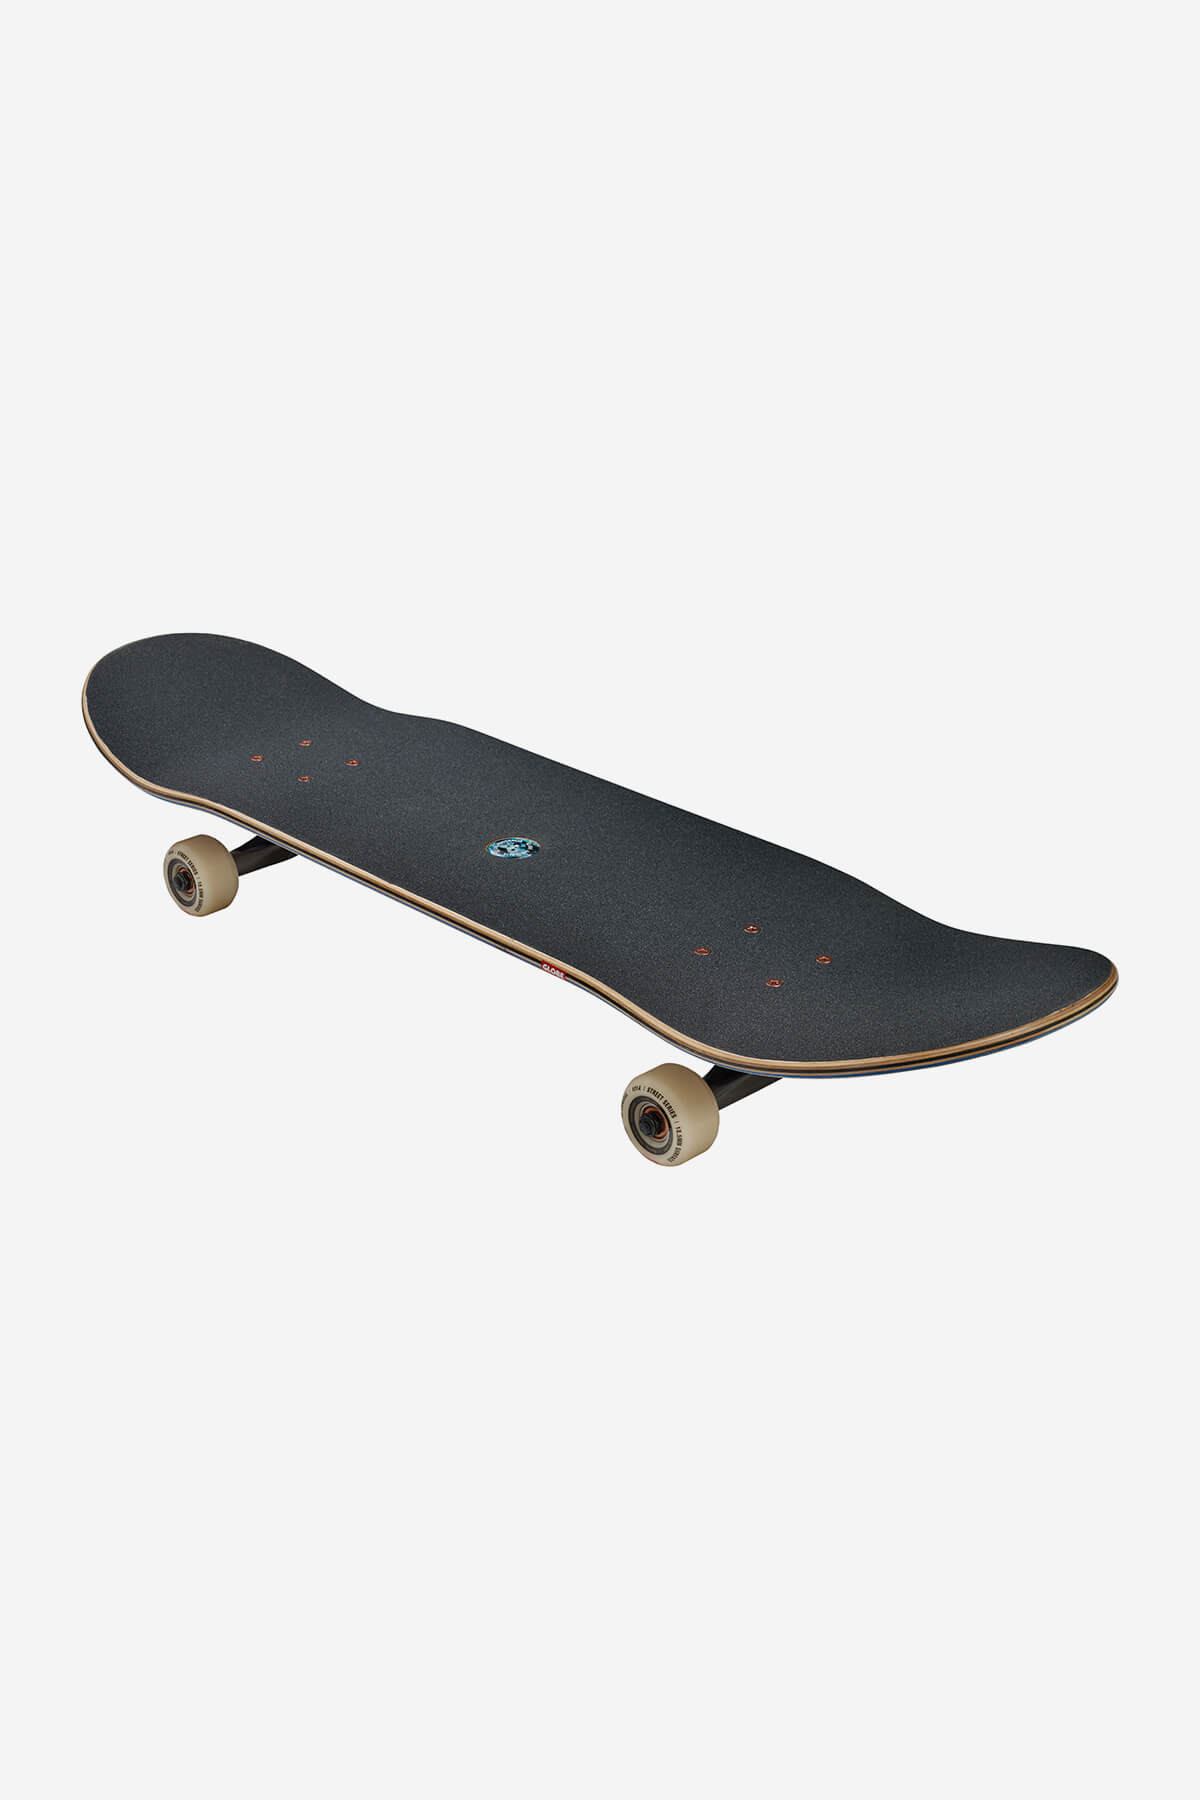 g2 rholtsu stack 8,25" completo skateboard